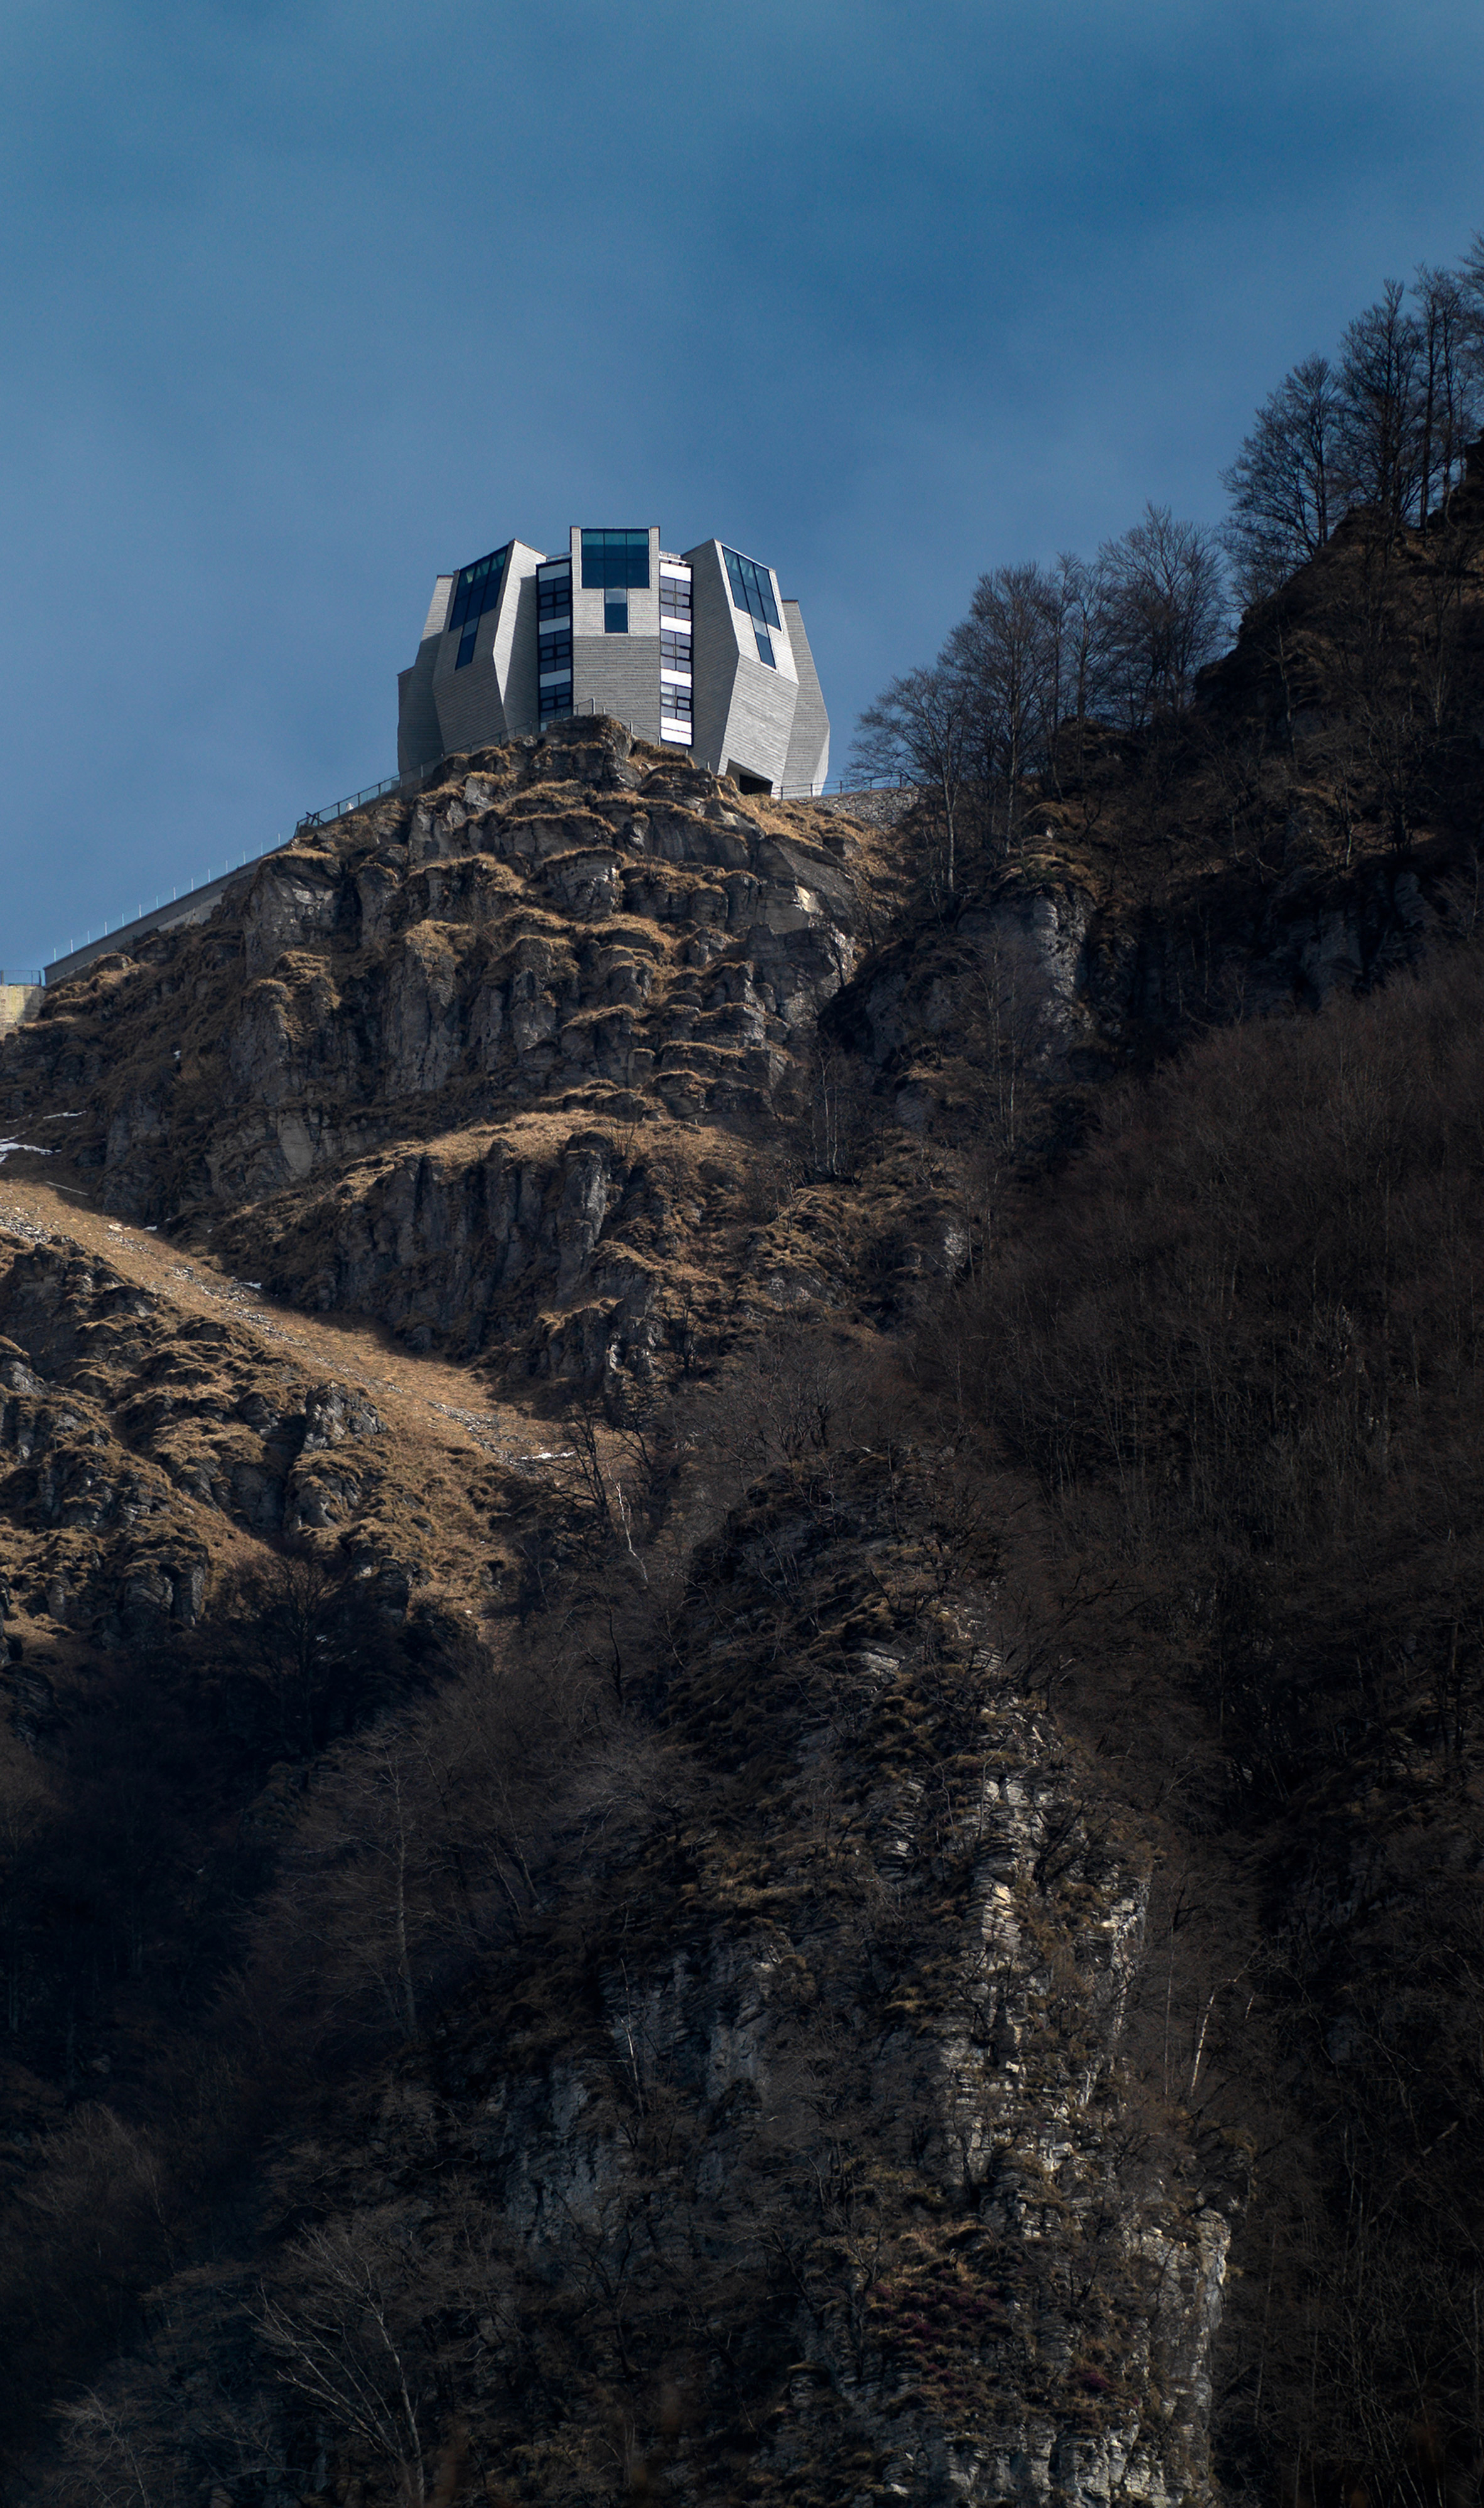 Mario Botta pairs stone with Jansen steel frames to create striped facade for Swiss mountain restaurant